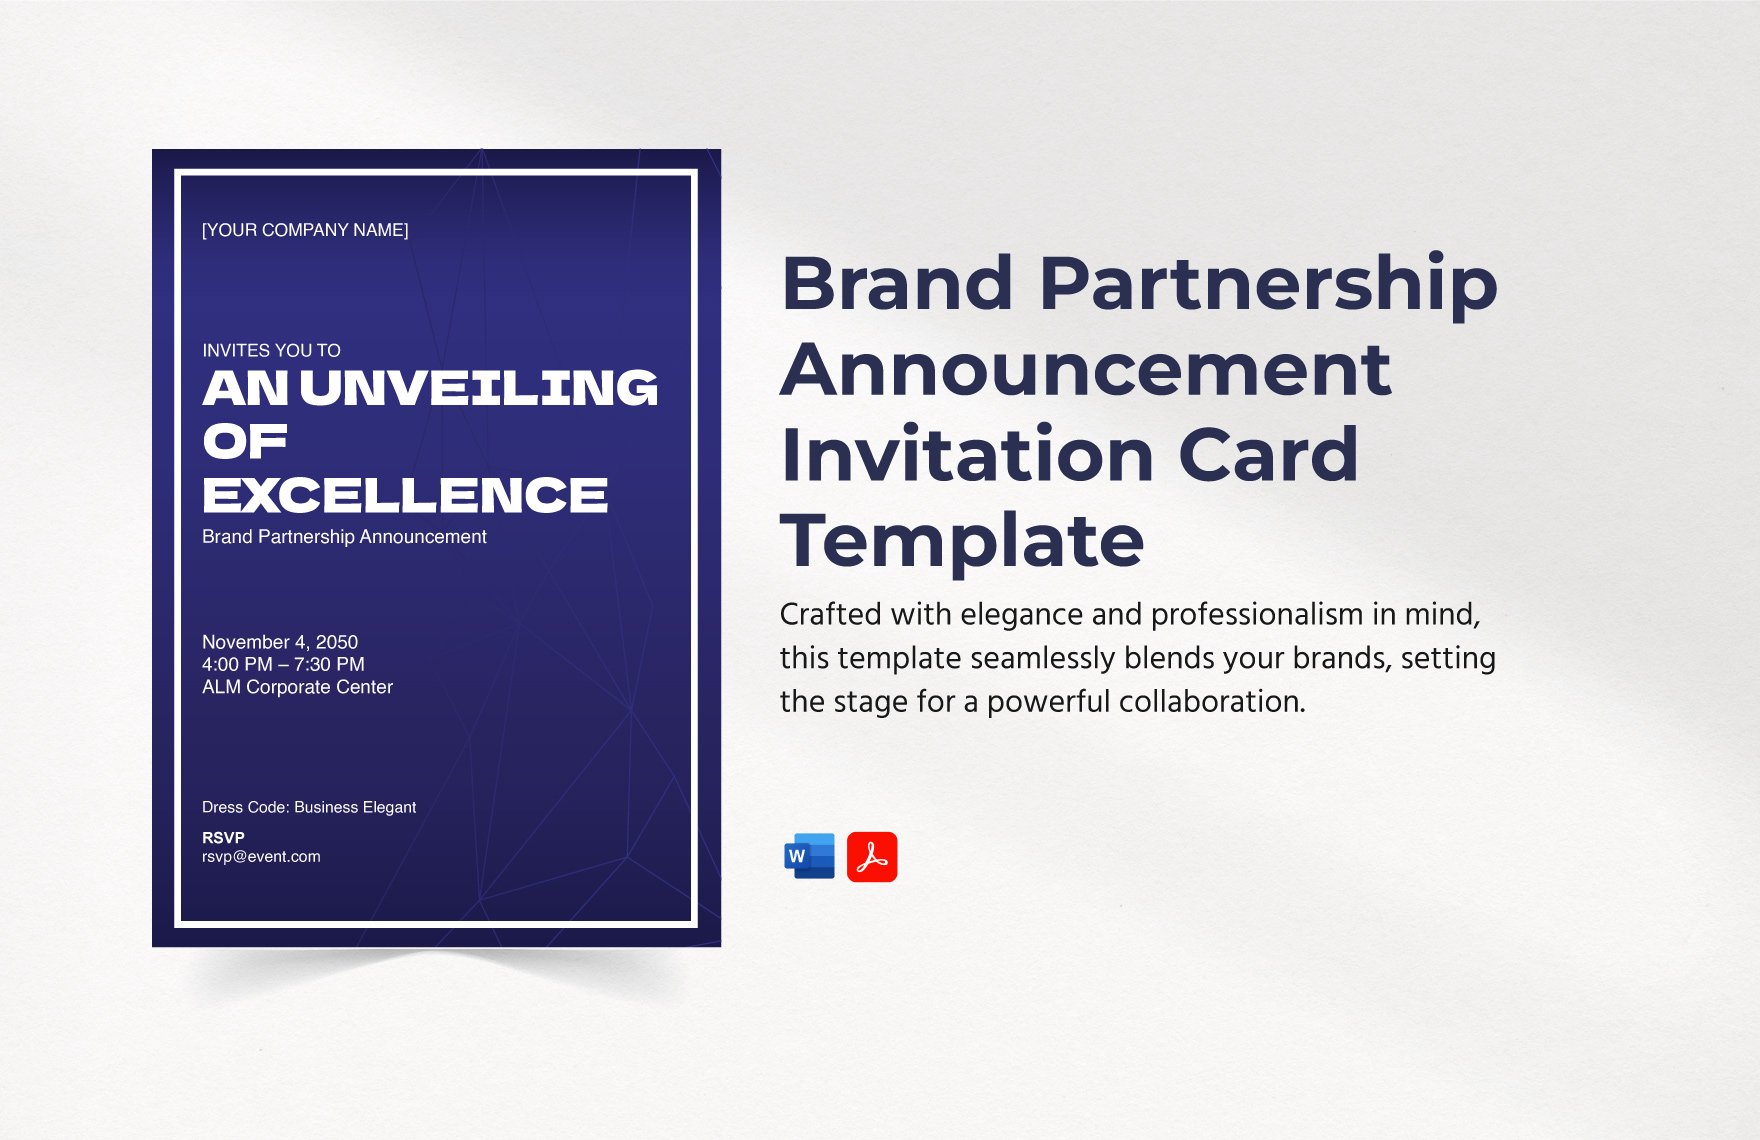 Brand Partnership Announcement Invitation Card Template